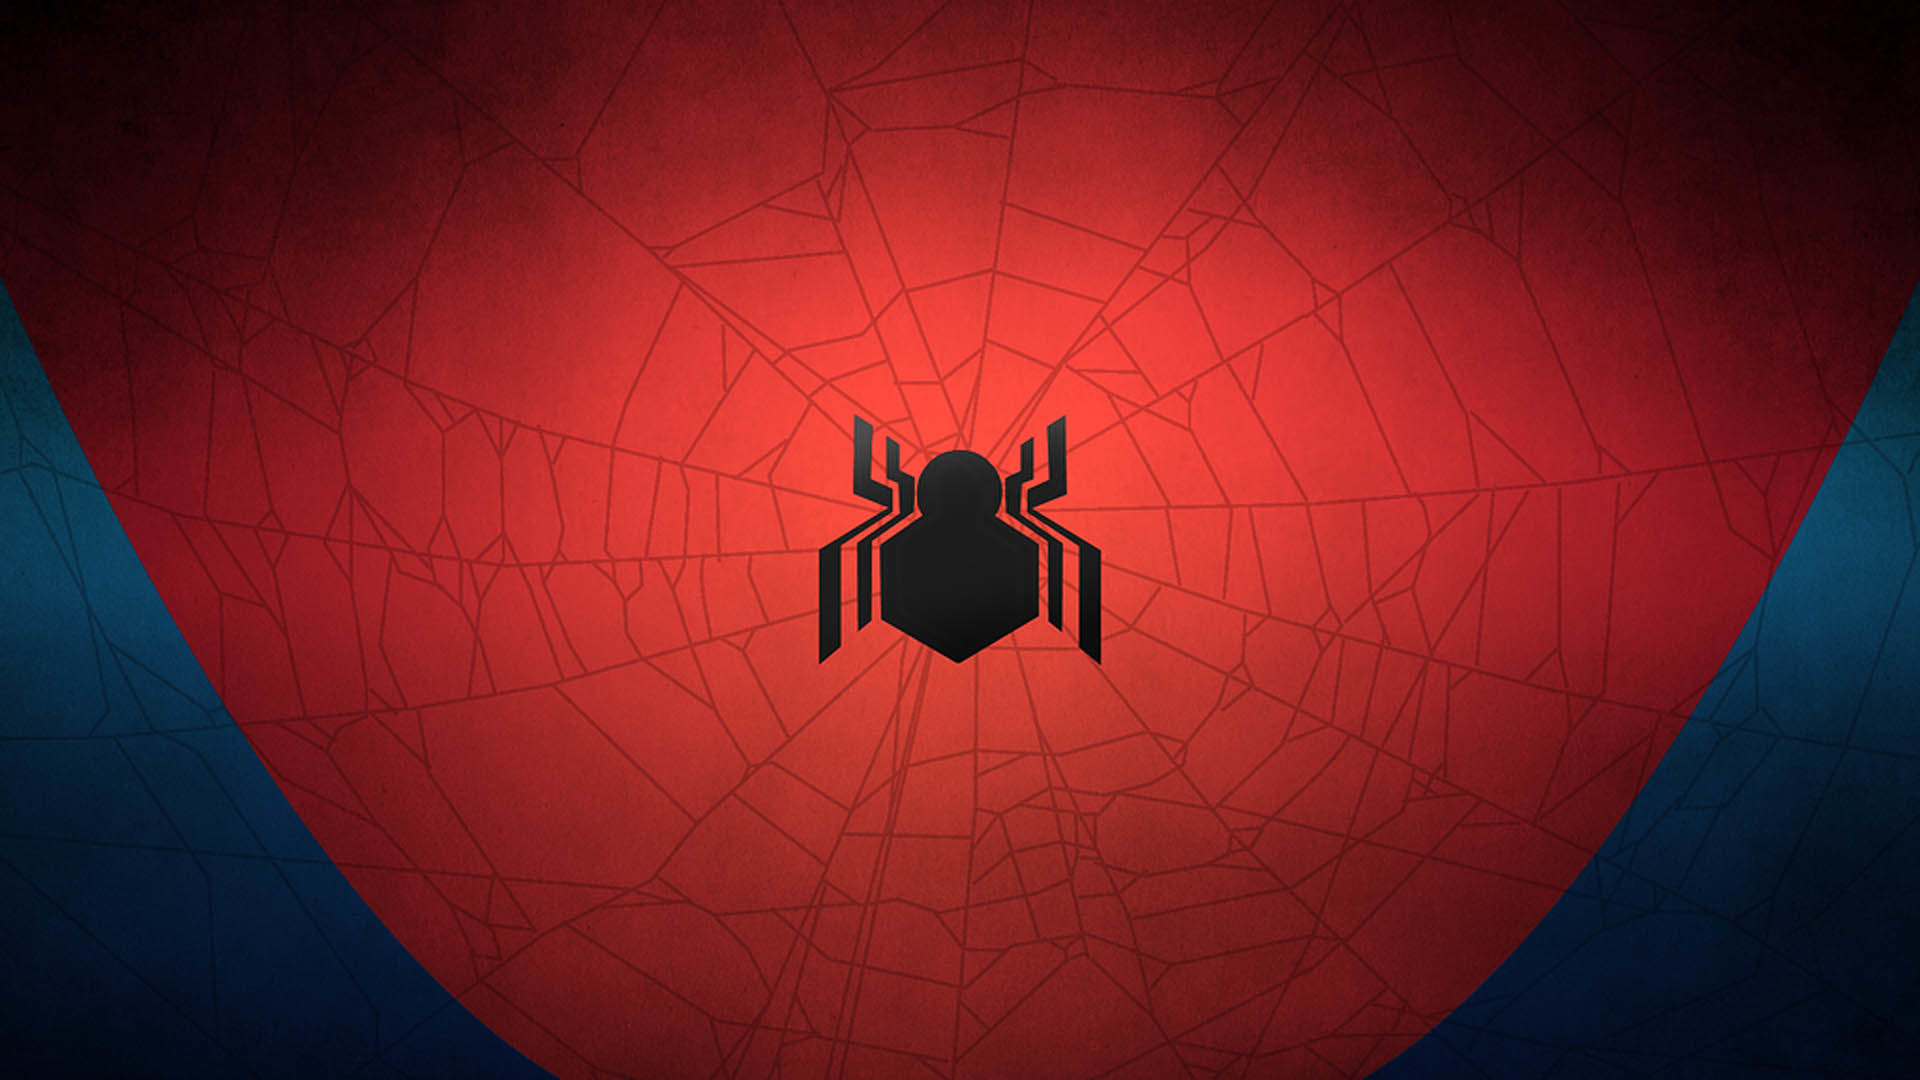 Spider Man HD Wallpaper 1080p Image